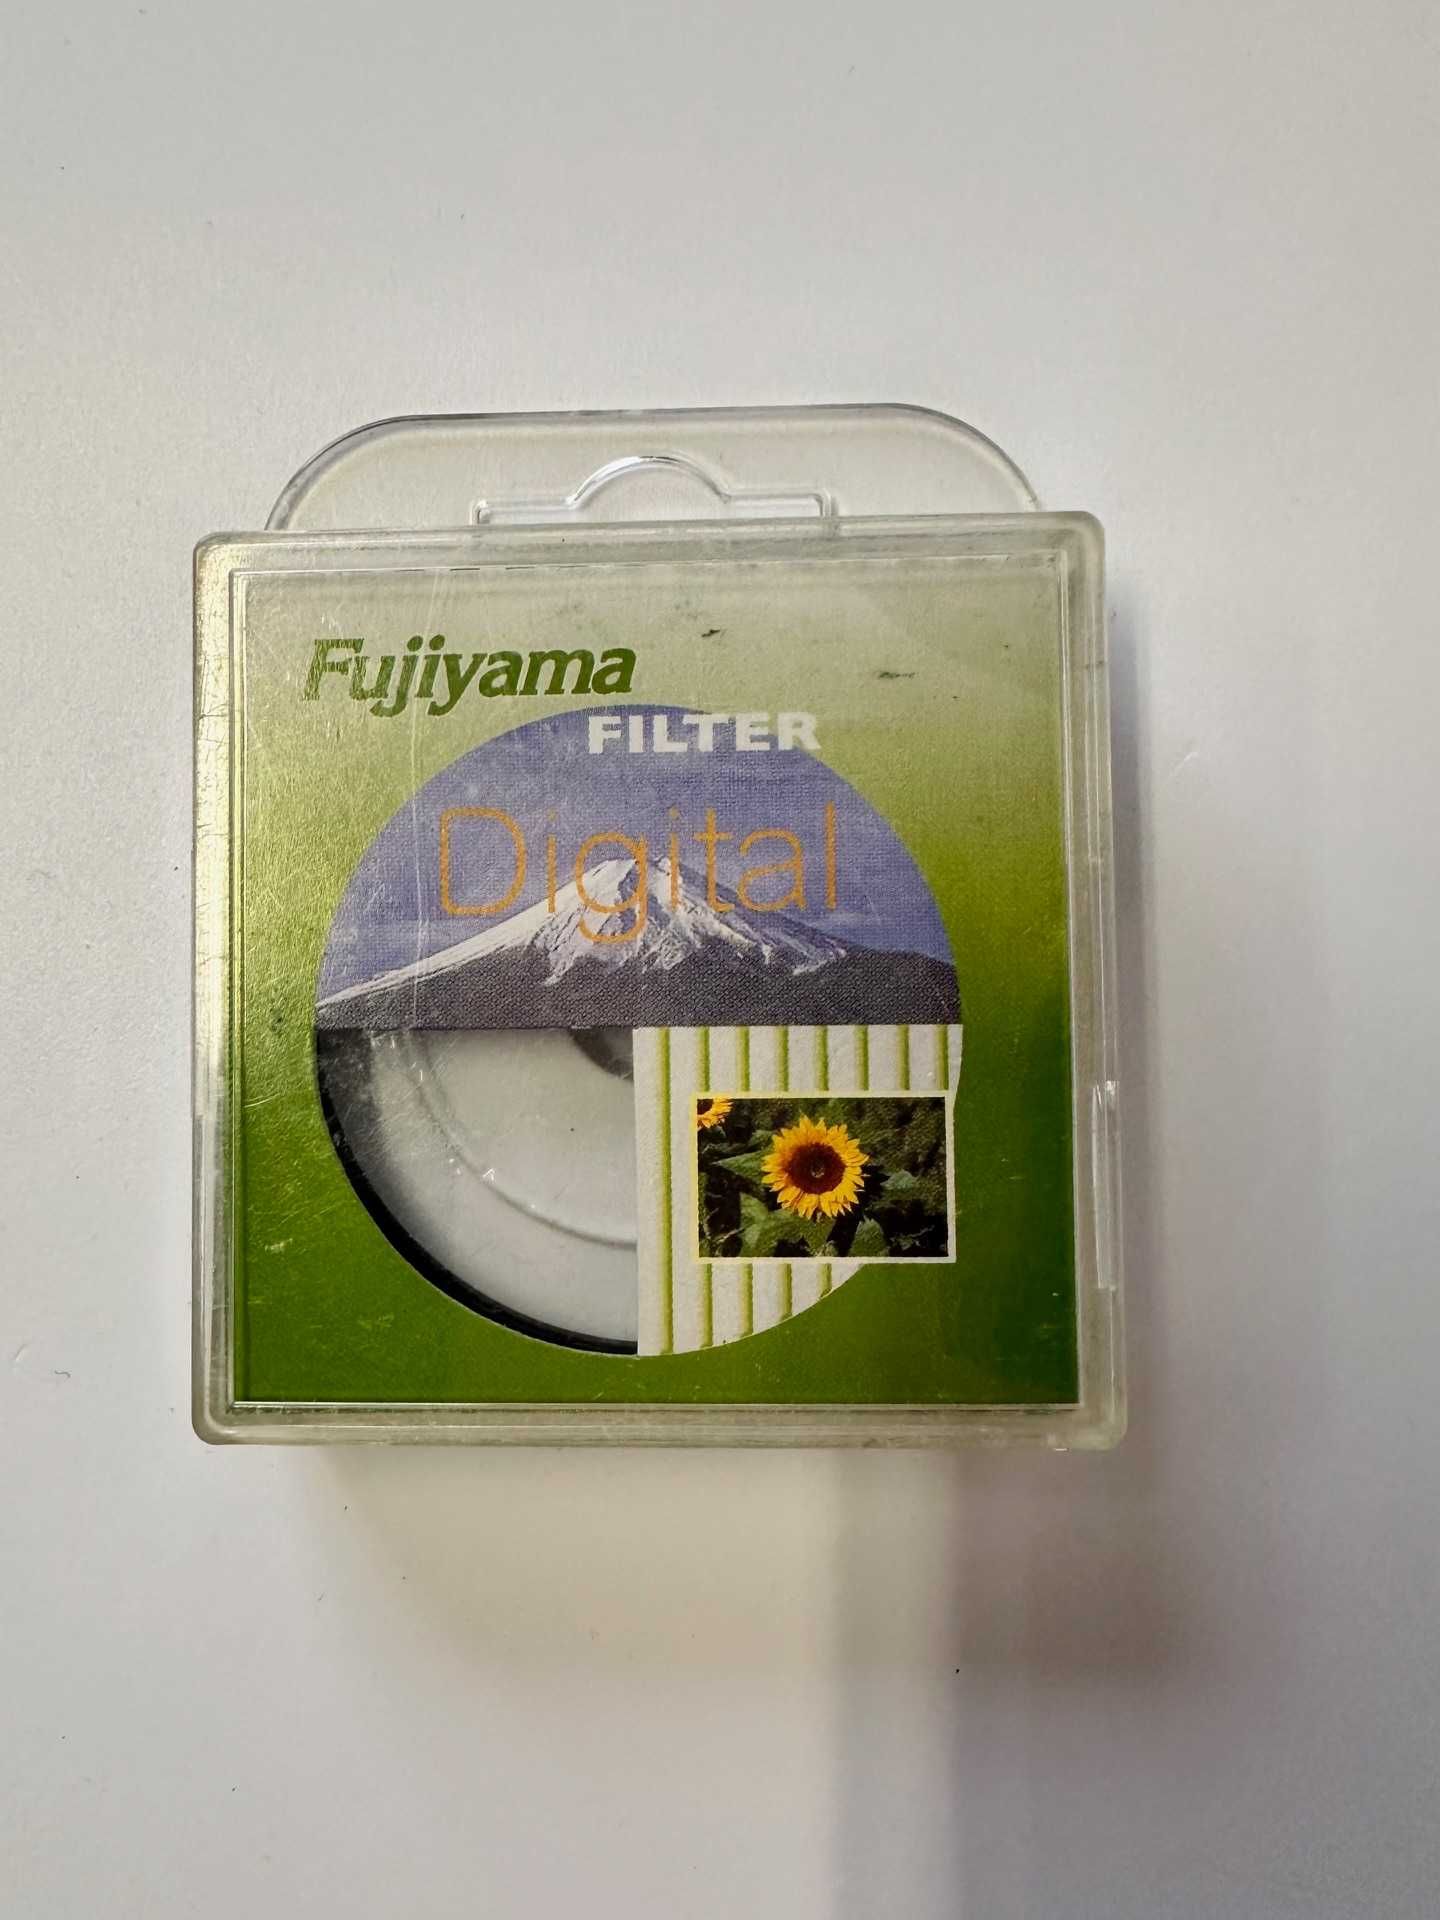 Filtr ochronny na obiektyw, Fujiyama Digital Filter, 58 mm, UV, Japan